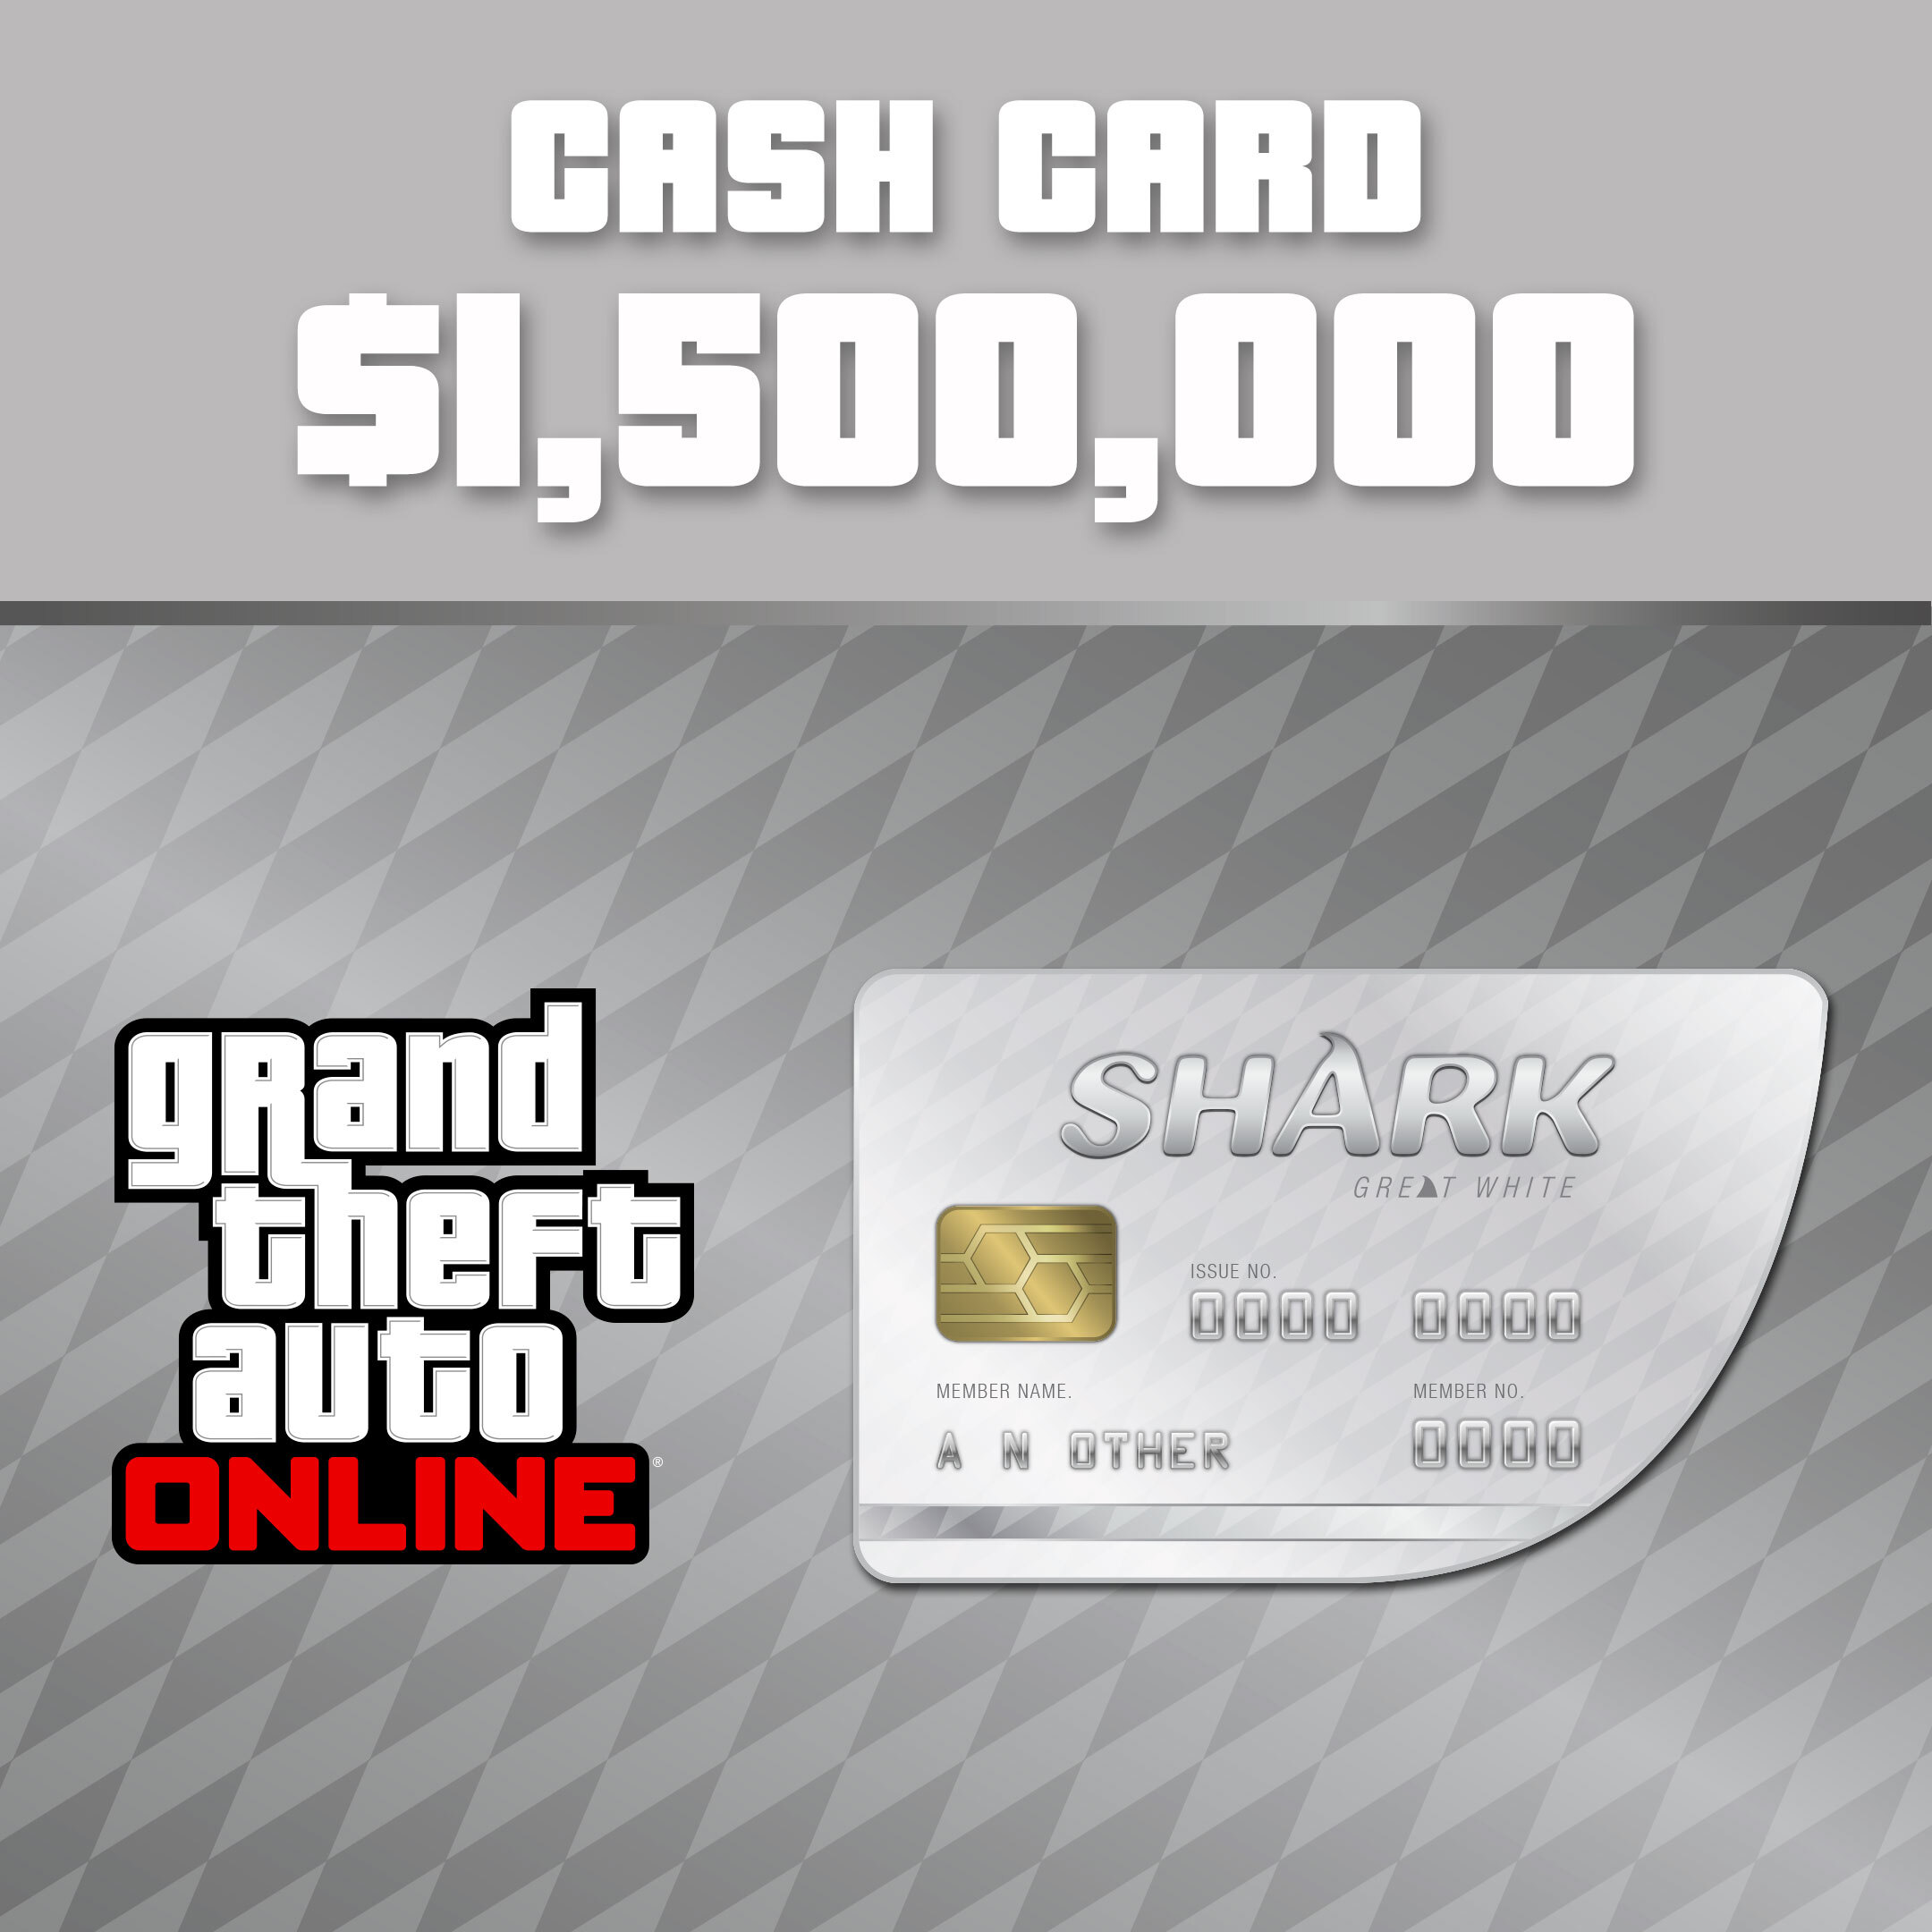 Grand Theft Auto Online: Shark Cash Cards | Official | Rockstar Store